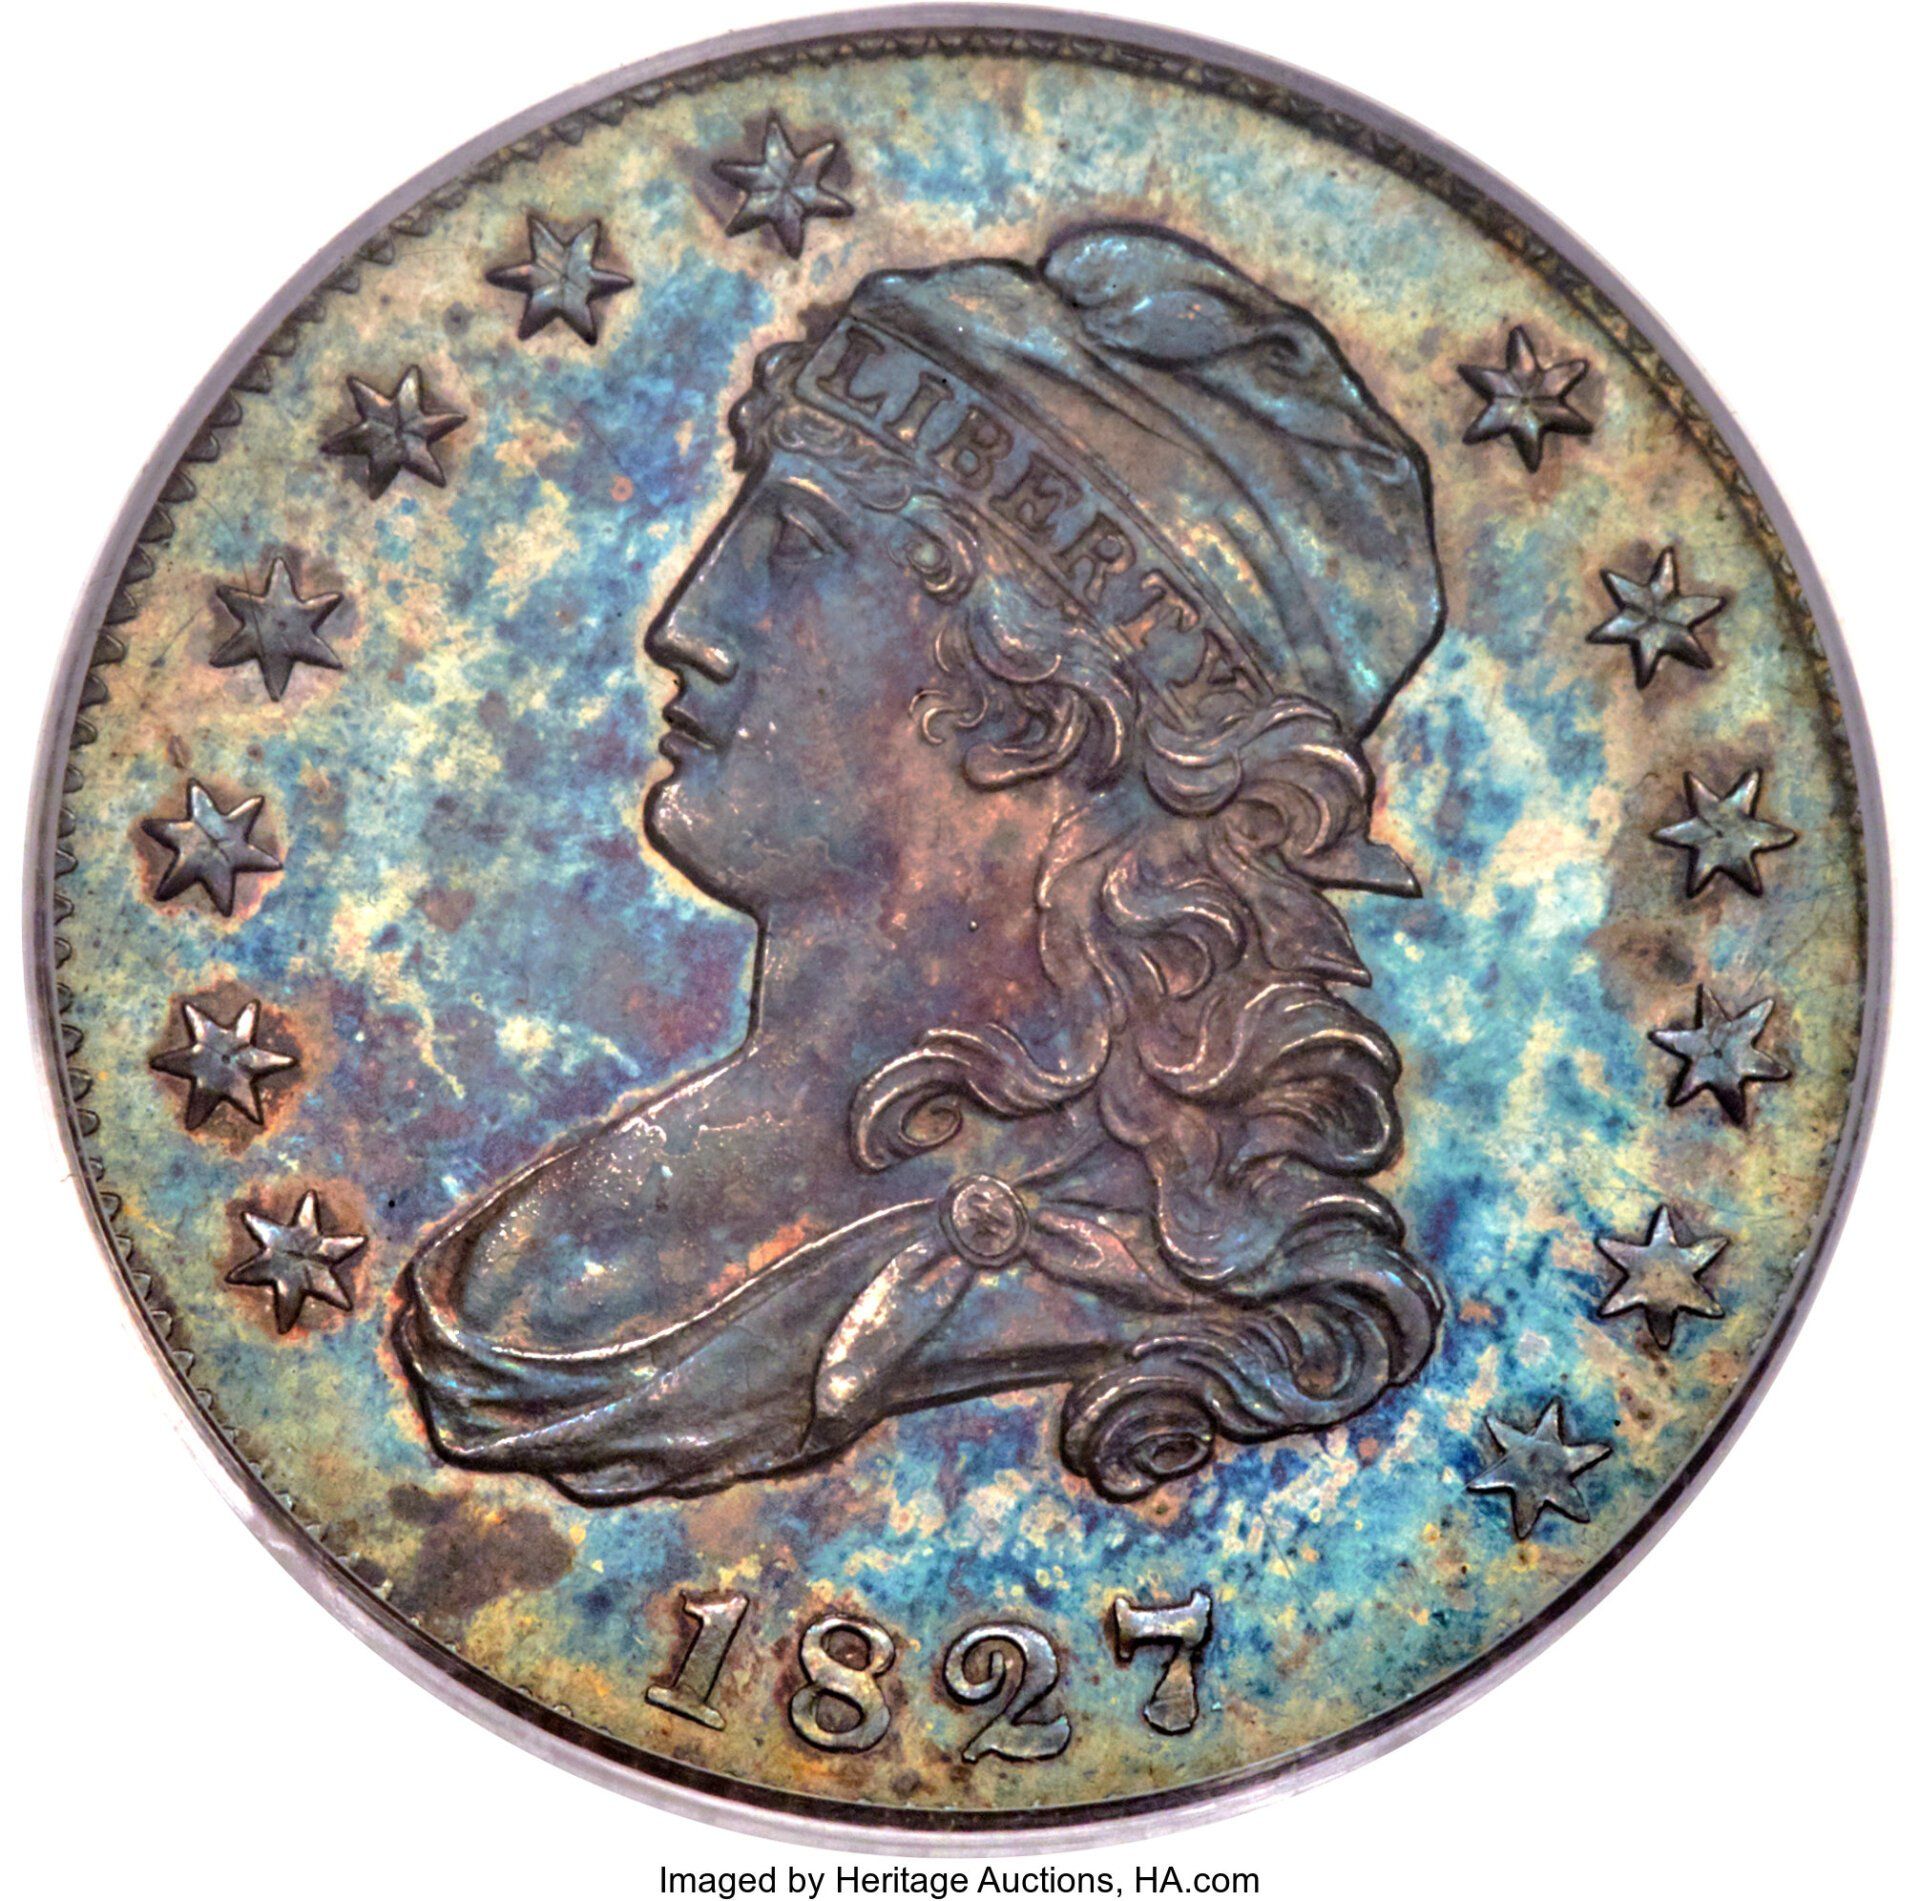 1827 Original Capped Bust Quarter Image courtesy of Heritage Auctions, HA.com